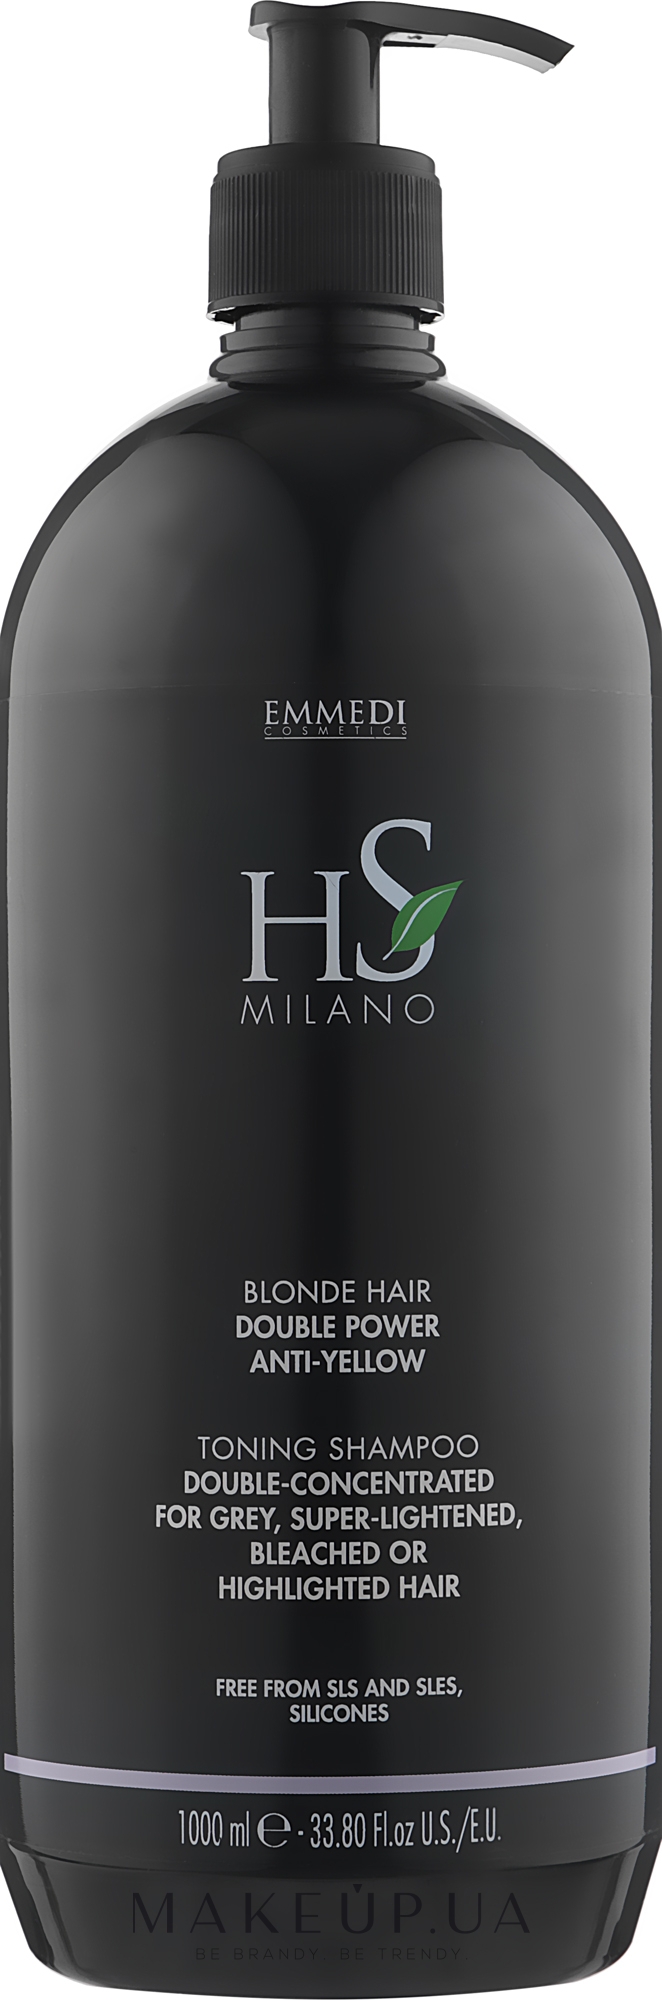 Антижелтый шампунь для блондинок - HS Milano Blonde Hair Double Power Anti-Yellow Shampoo — фото 1000ml